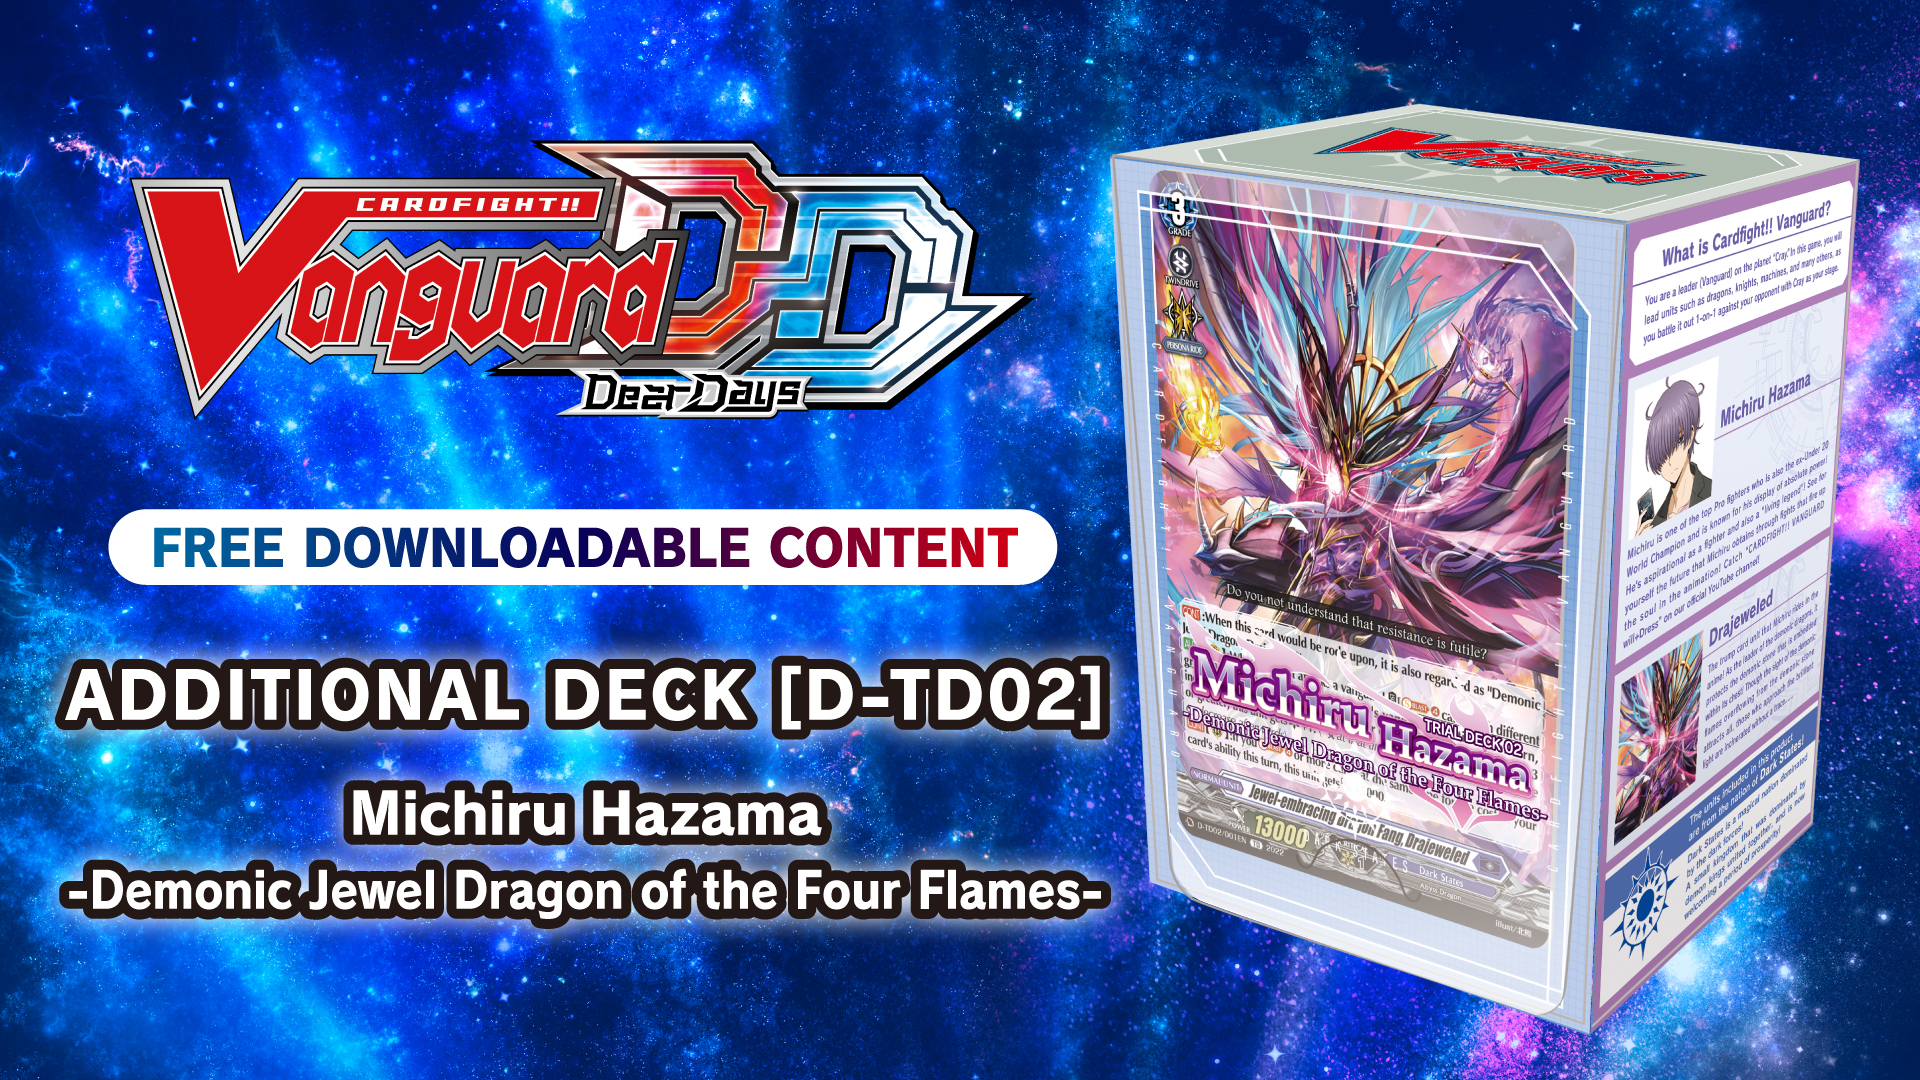 Additional Deck [D-TD02]: Michiru Hazama -Demonic Jewel Dragon of the Four Flames-